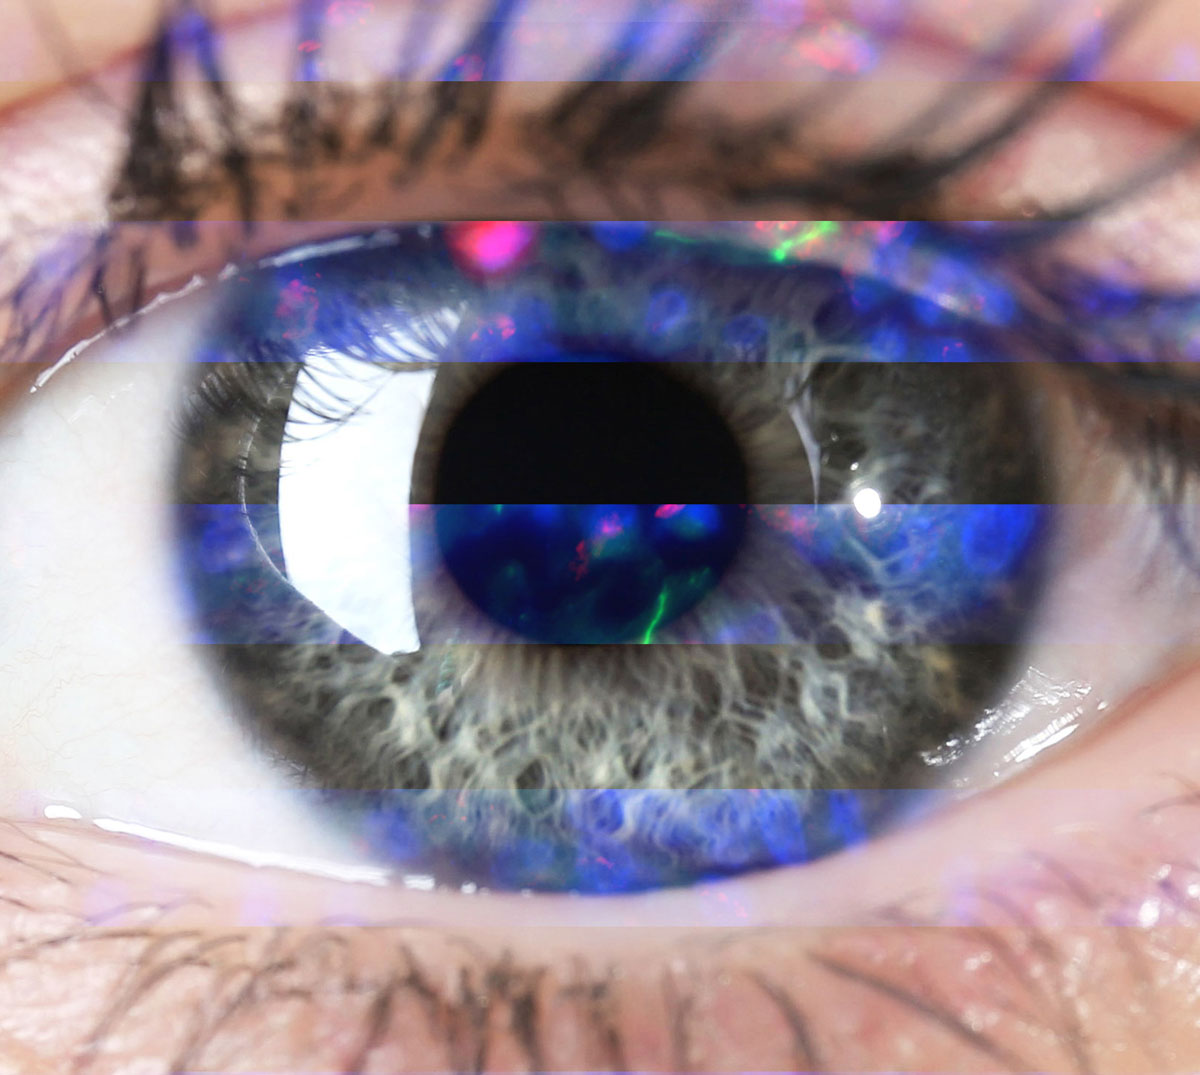 Closeup image of a human eye